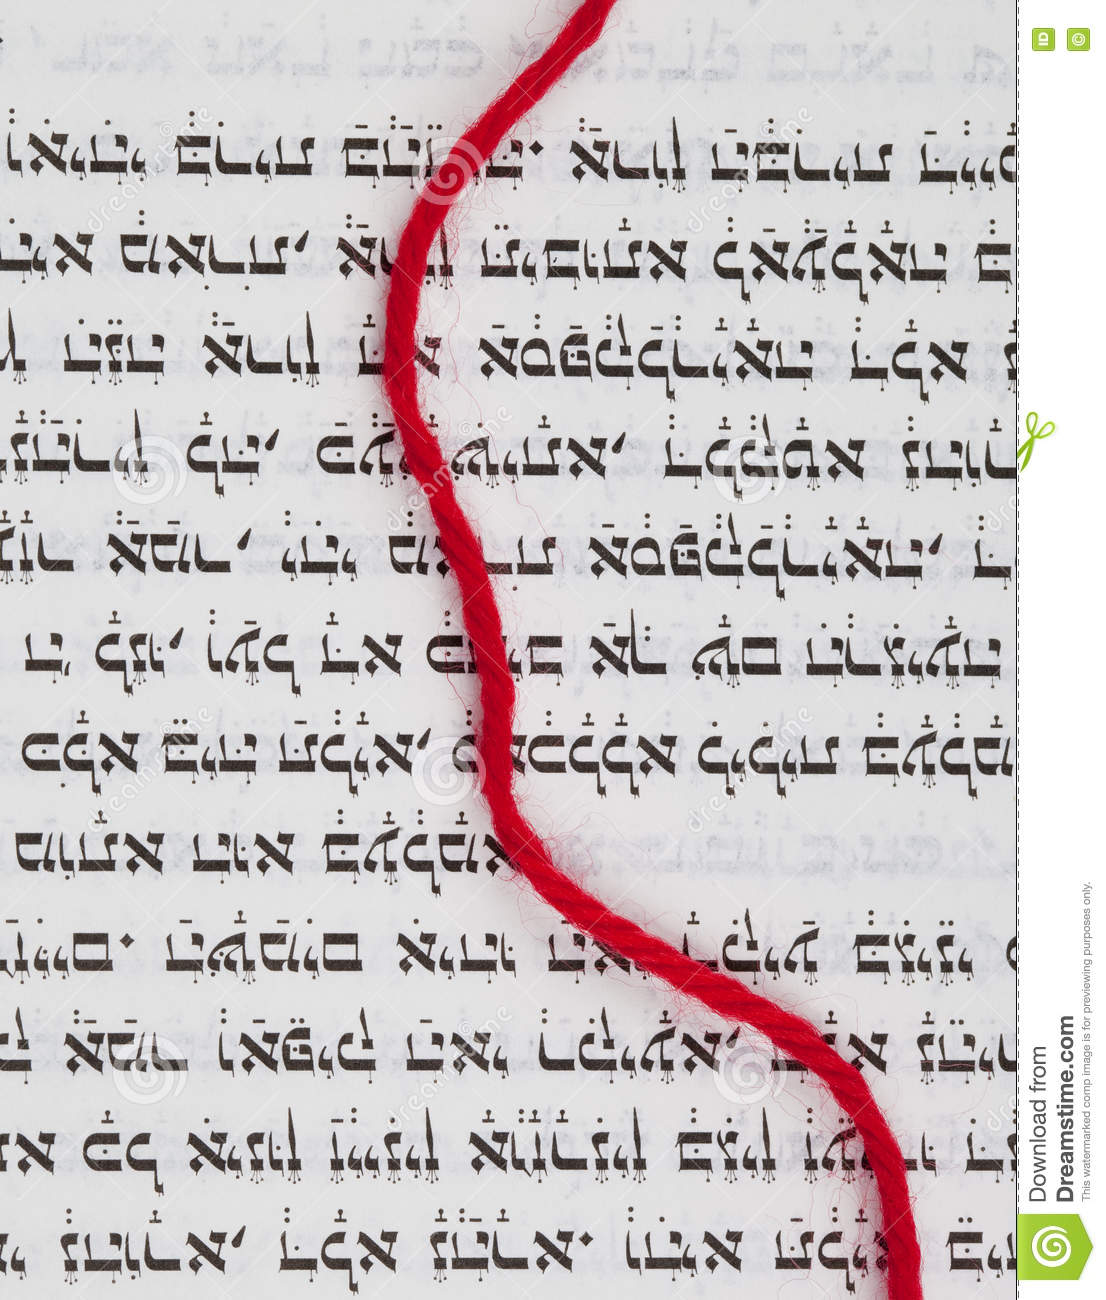 red-thread-symbol-kabbalah-zohar-aramaic-bacground-75998687[1]